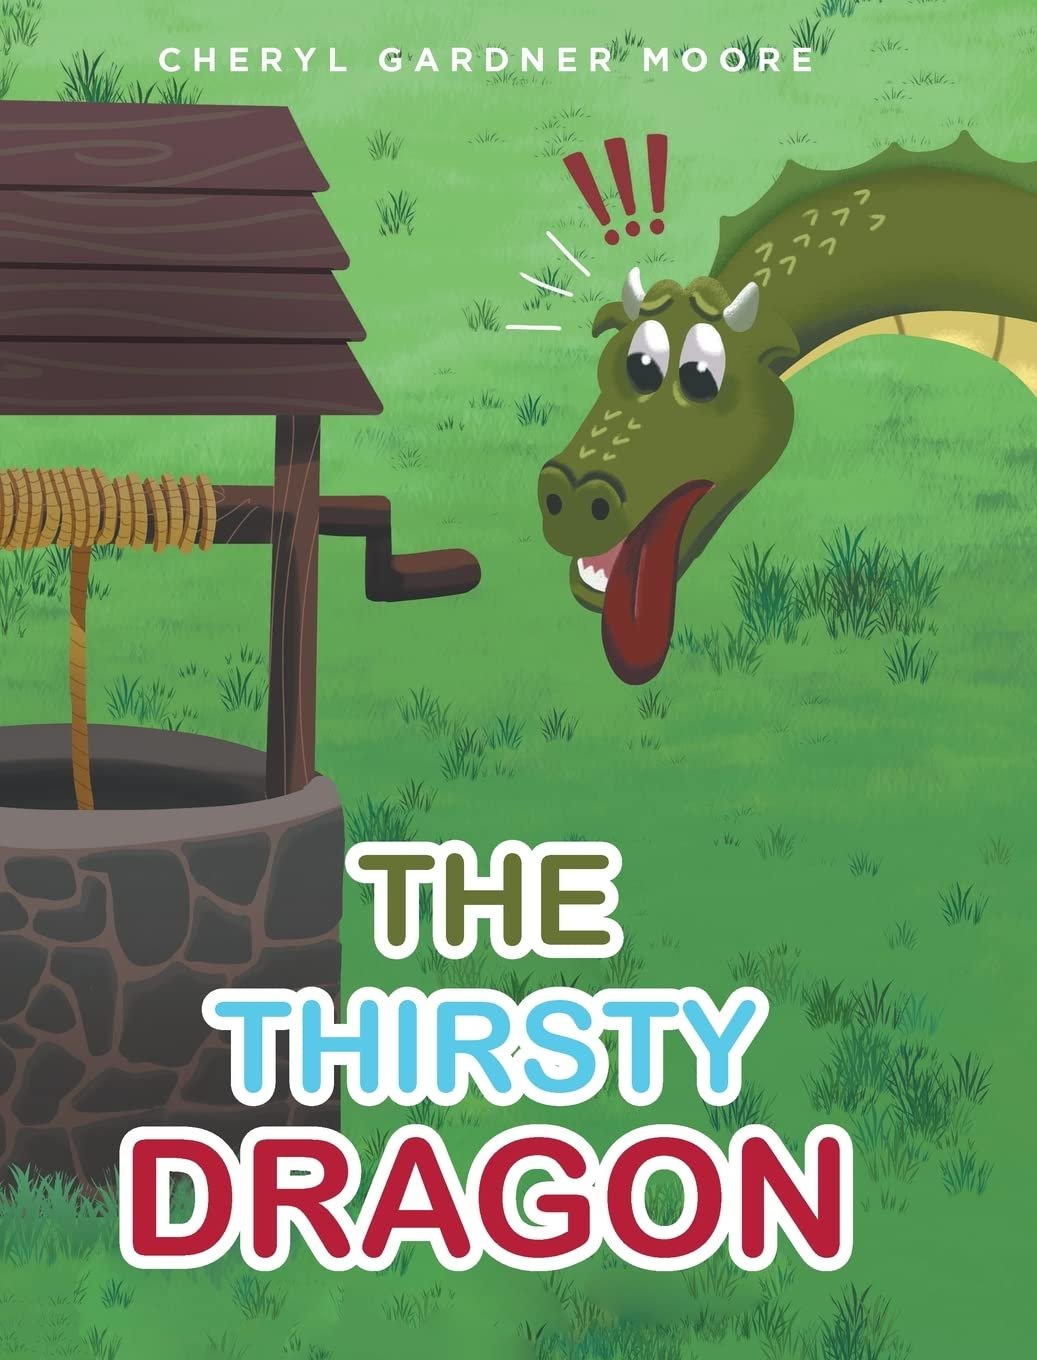 thirsty dragon.jpg